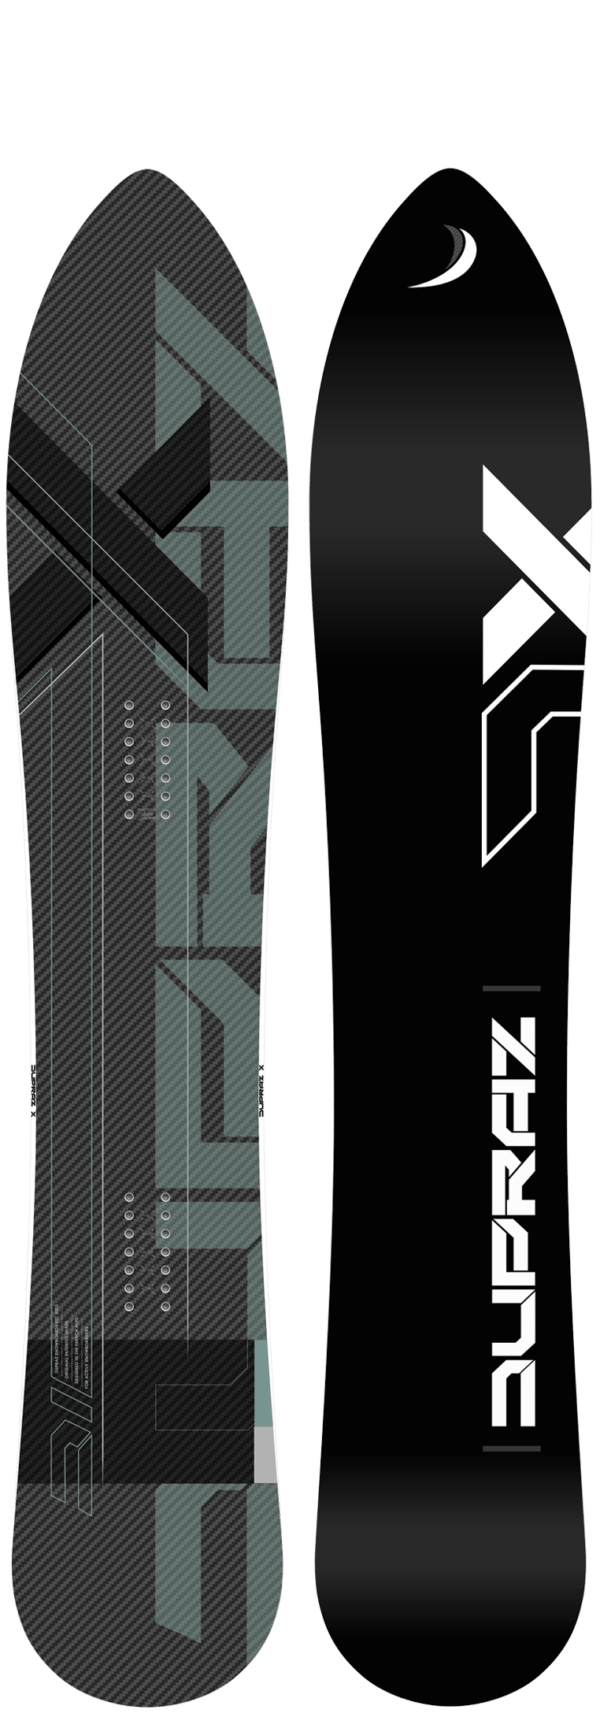 Dupraz Snowboard 10a Carbon Dupraz snowboards D1 X5